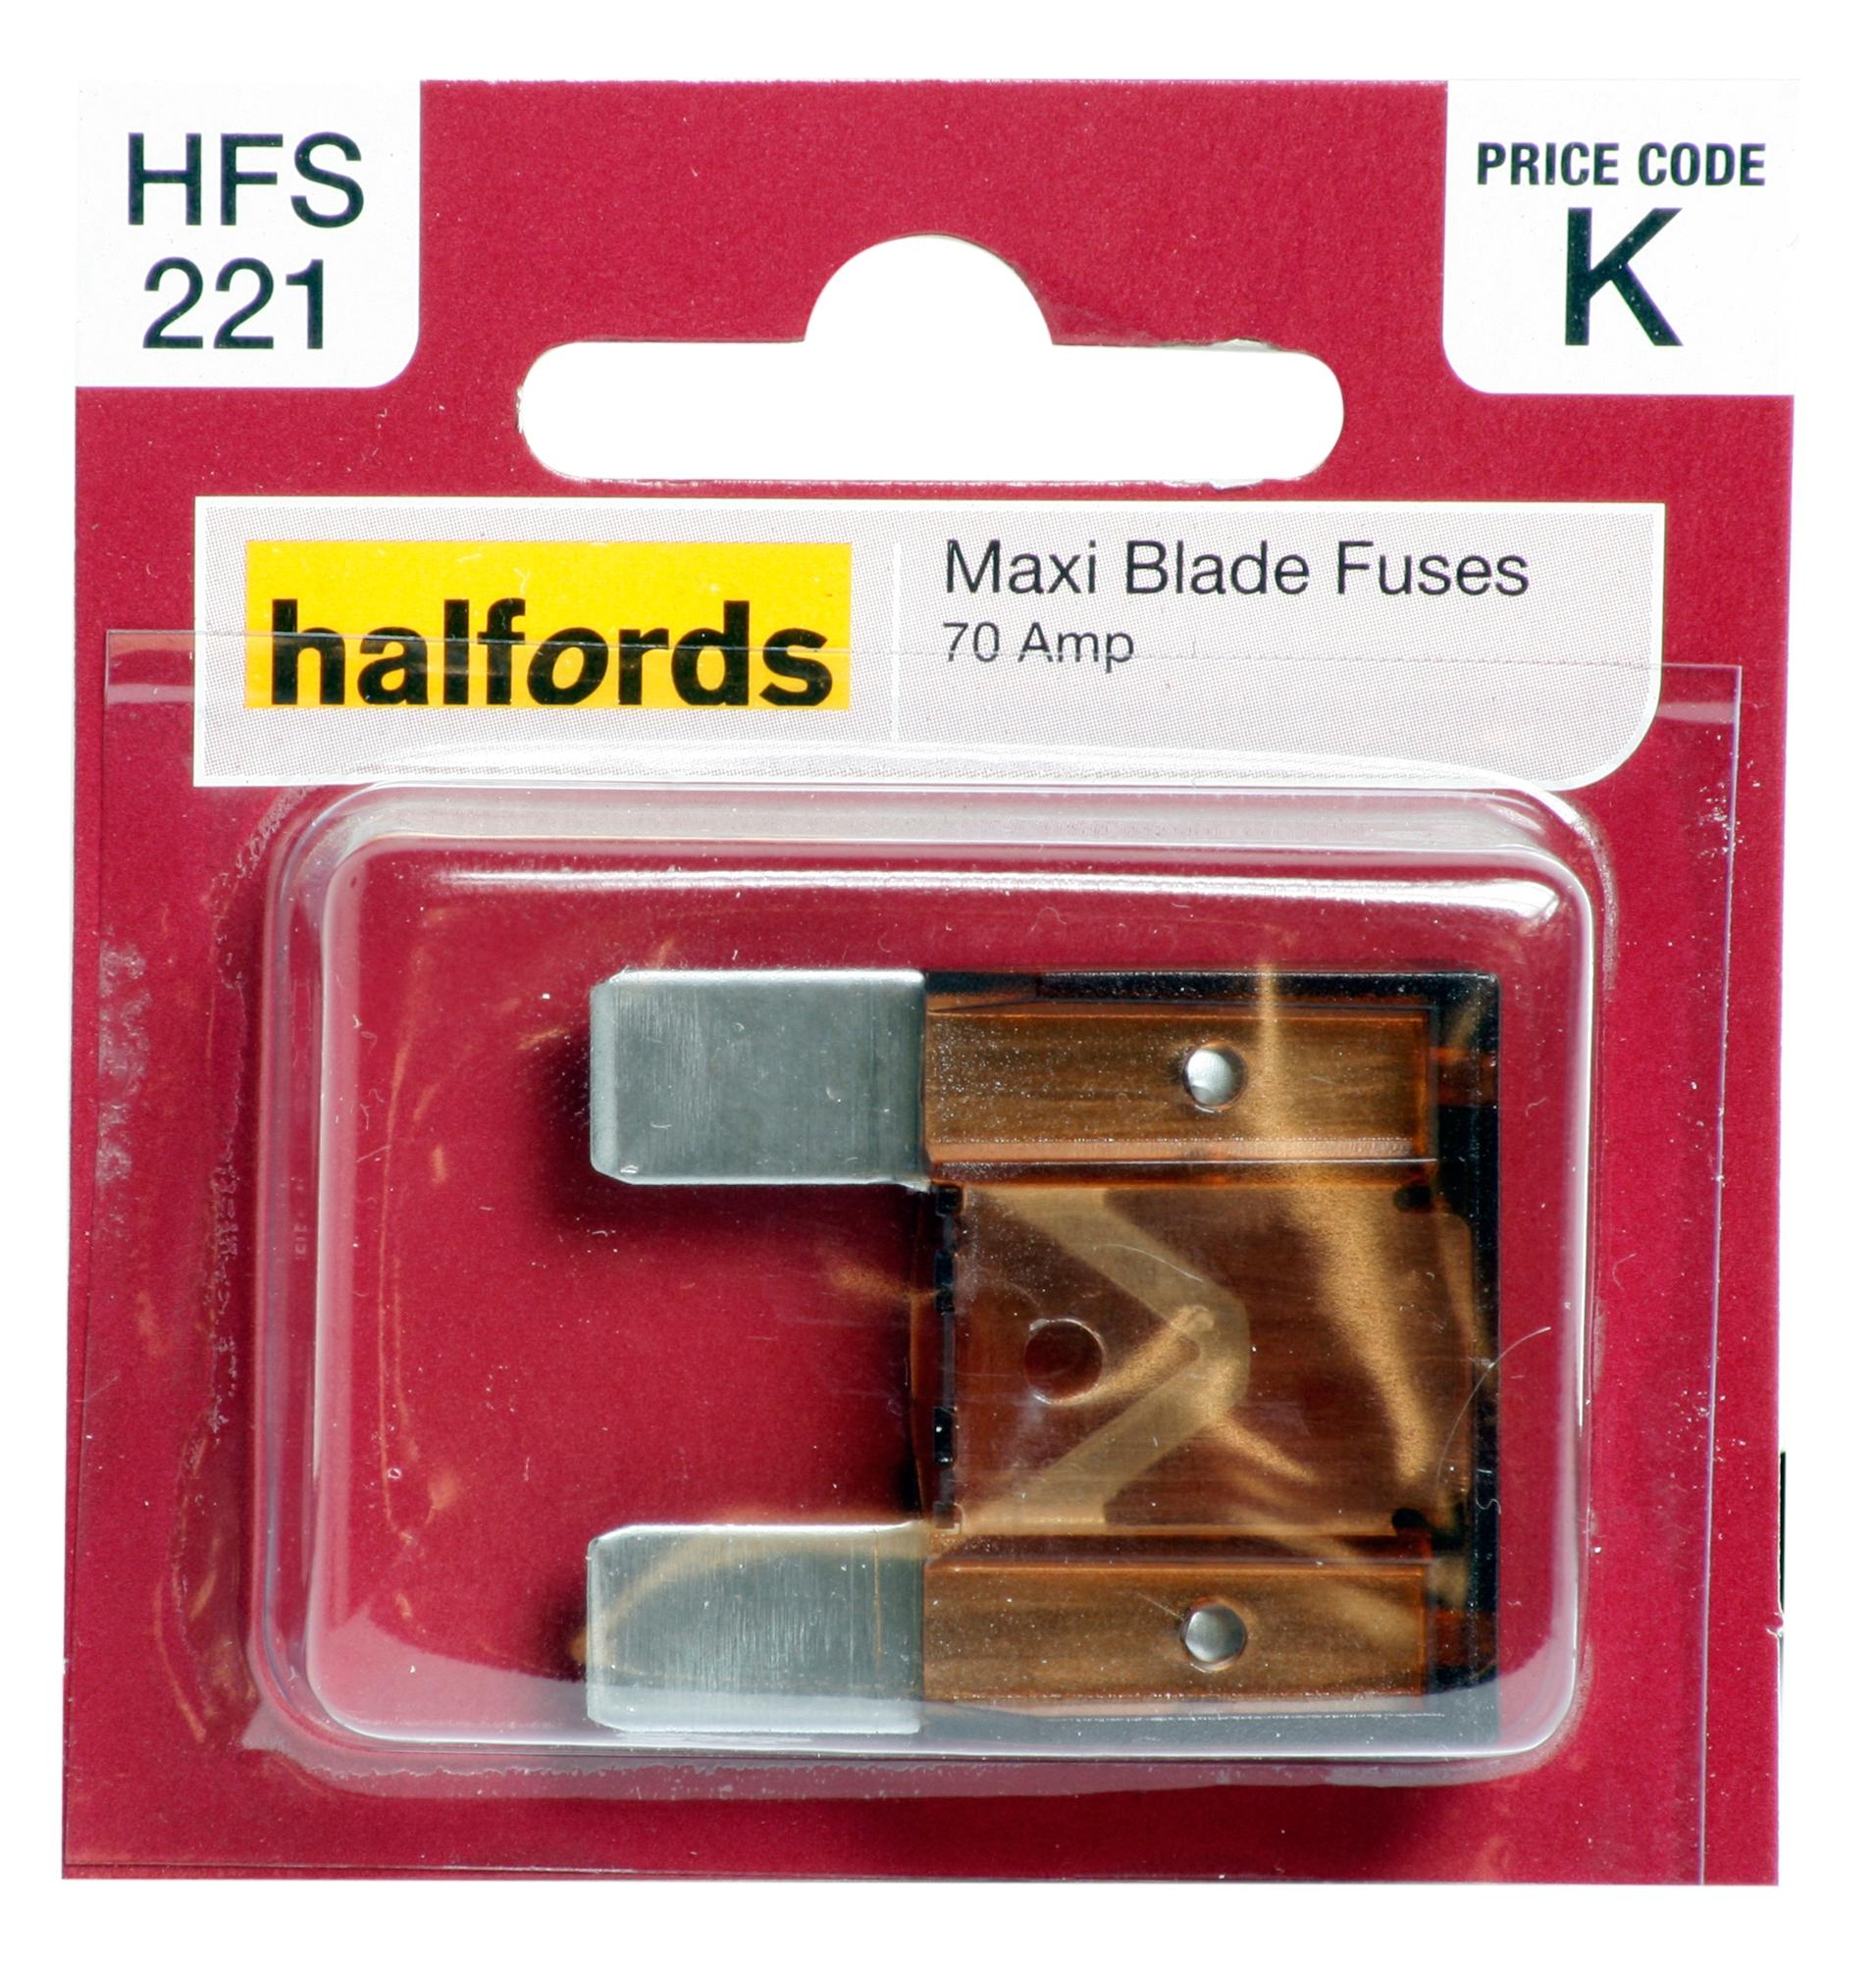 Halfords Maxi Blade Fuse 70 Amp (Hfs221)